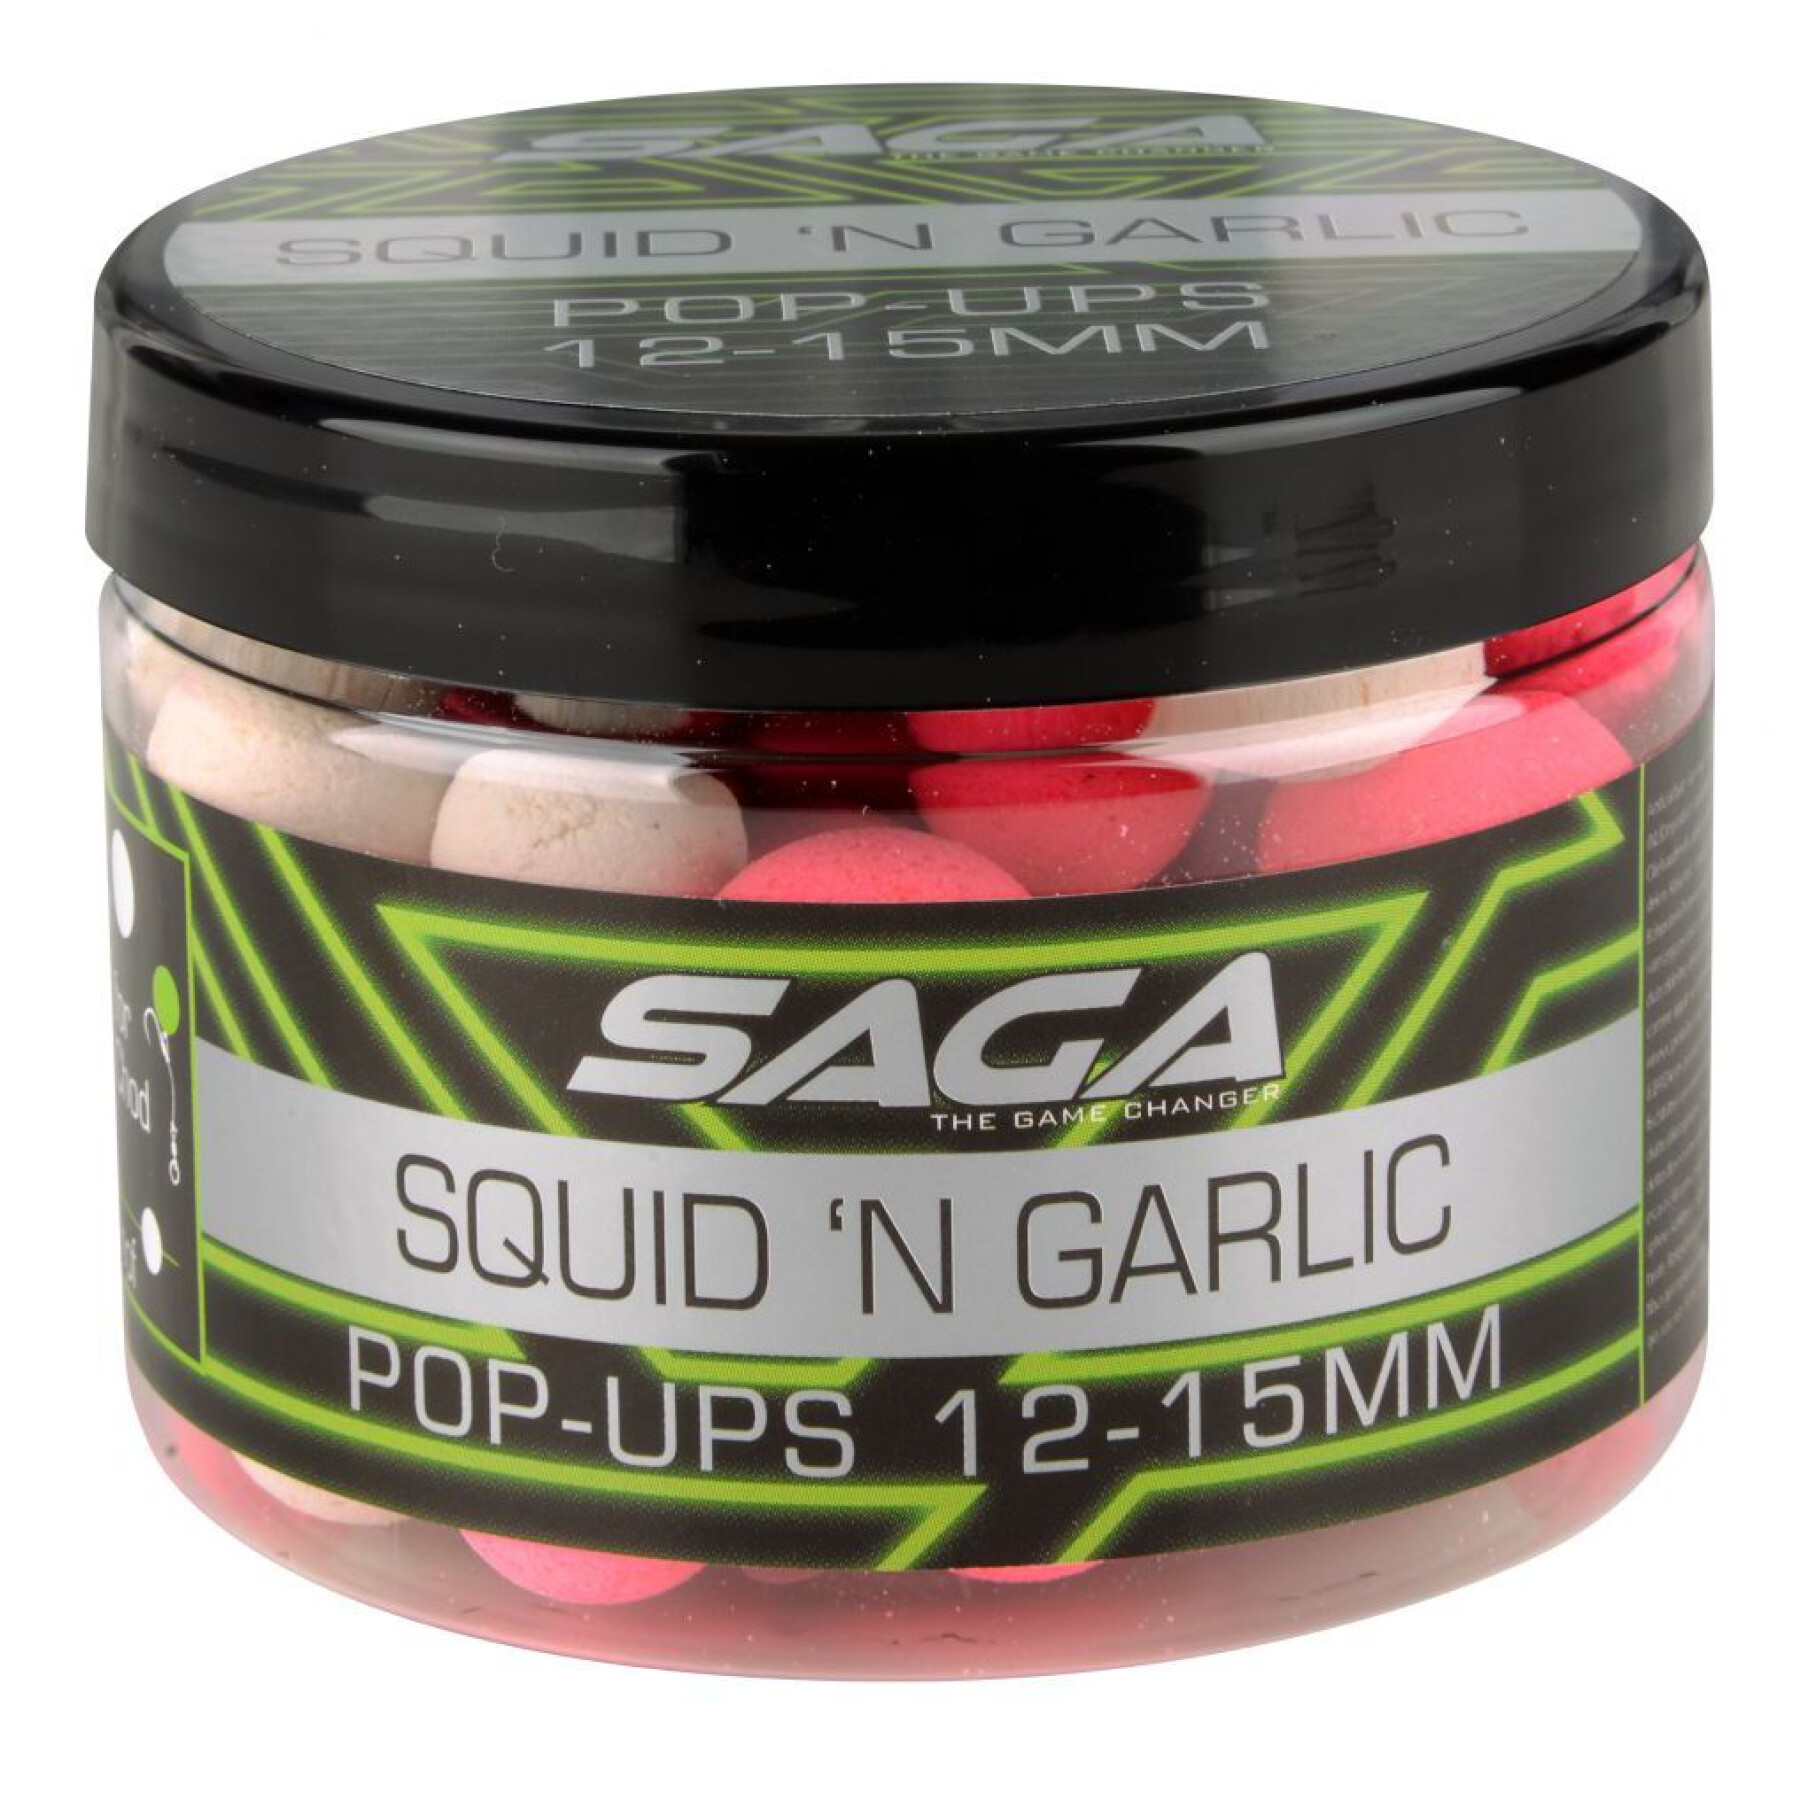 Pop-Ups Saga Squid & Garlic 50g